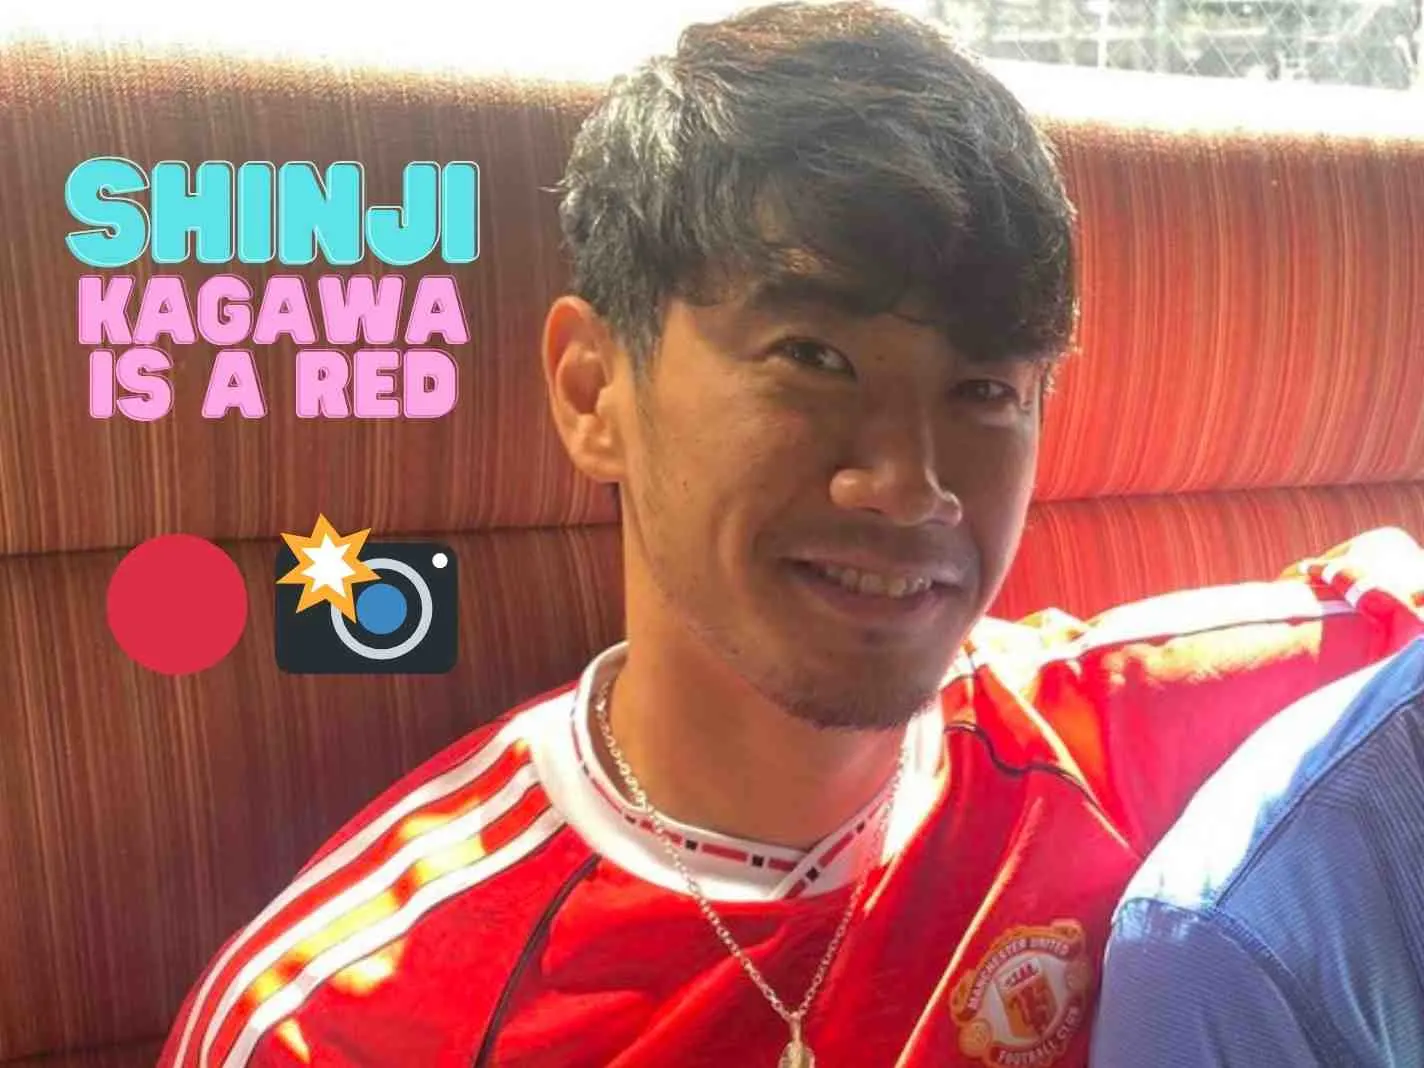 Former player Shinji Kagawa shows love for Manchester United by rocking retro kit